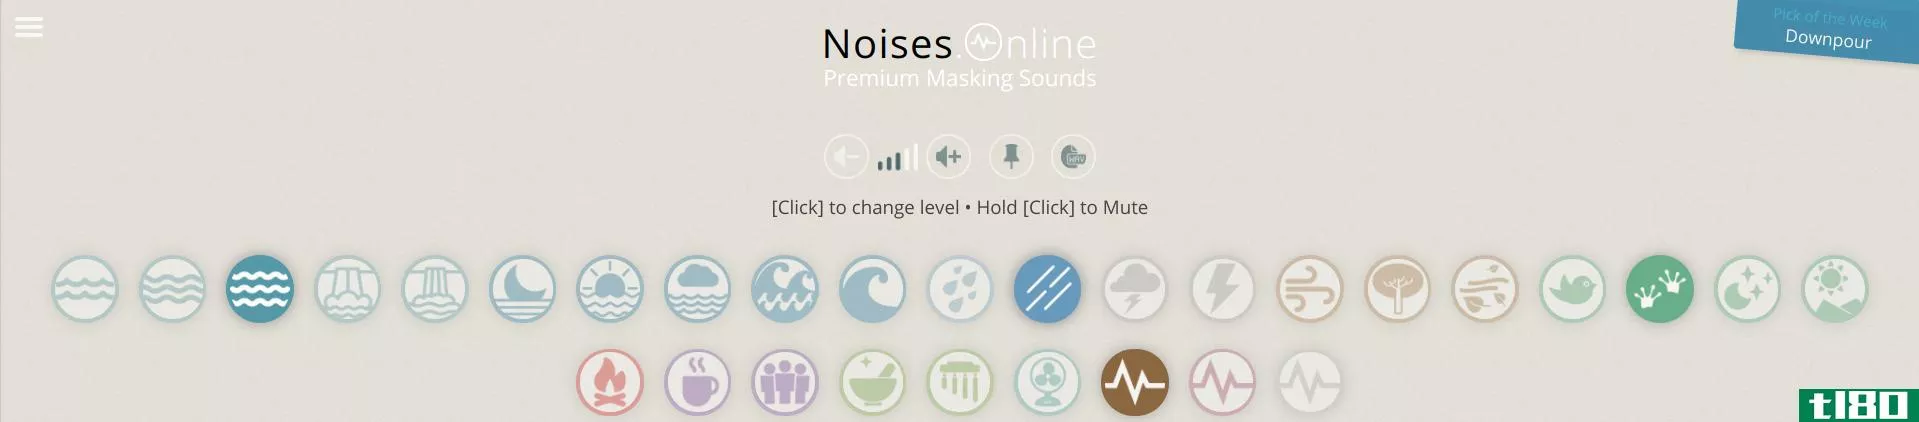 noises online screenshot